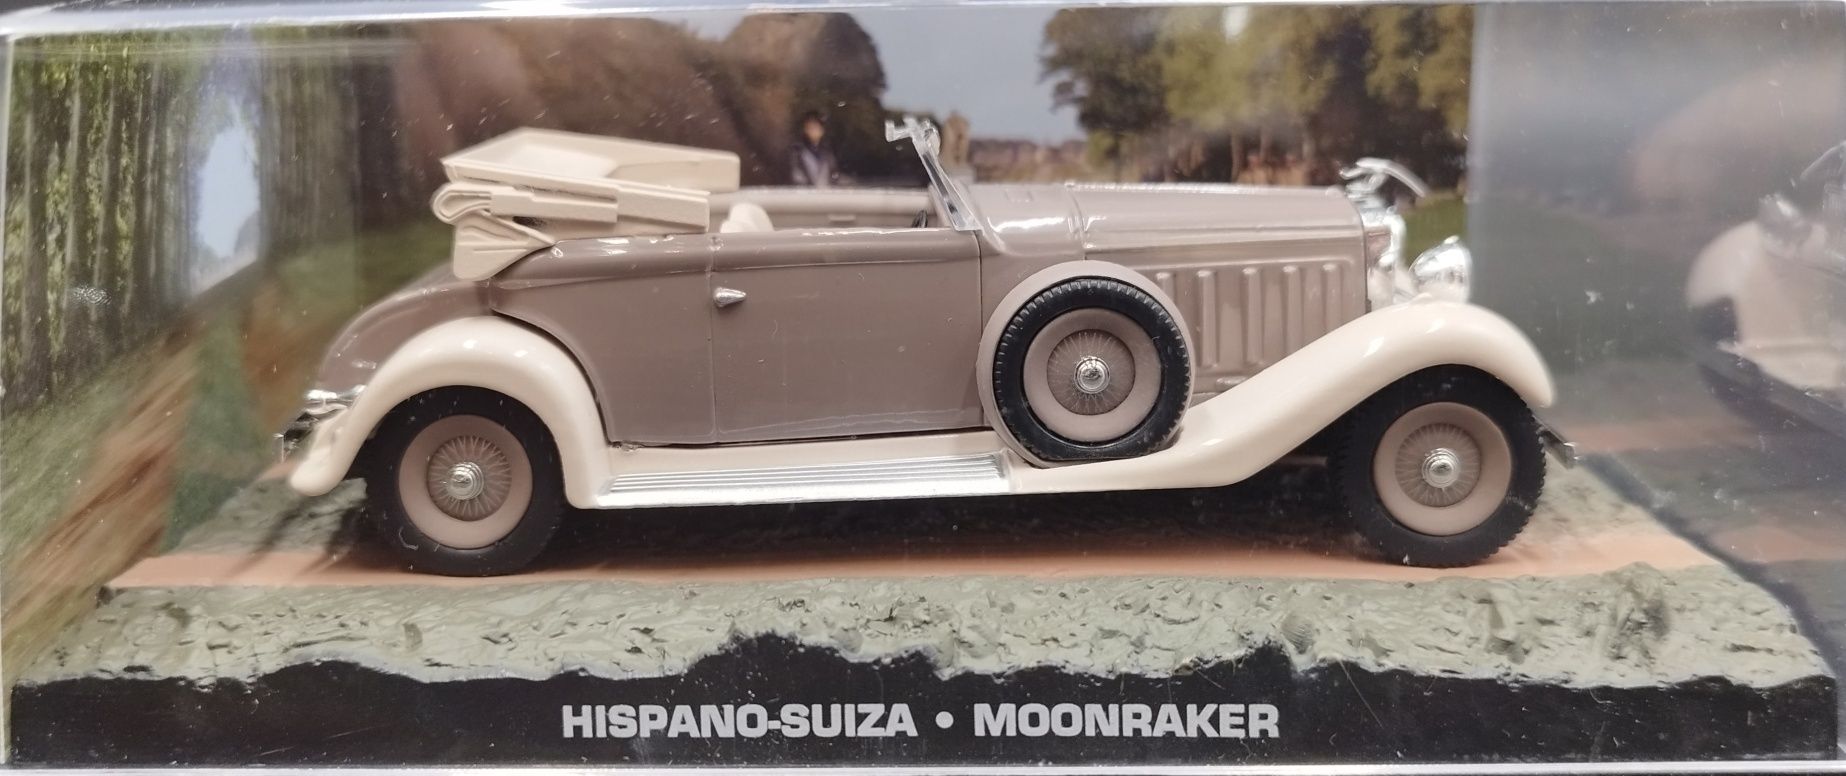 1:43 Hispano Suiza 007 James Bond Moonraker model